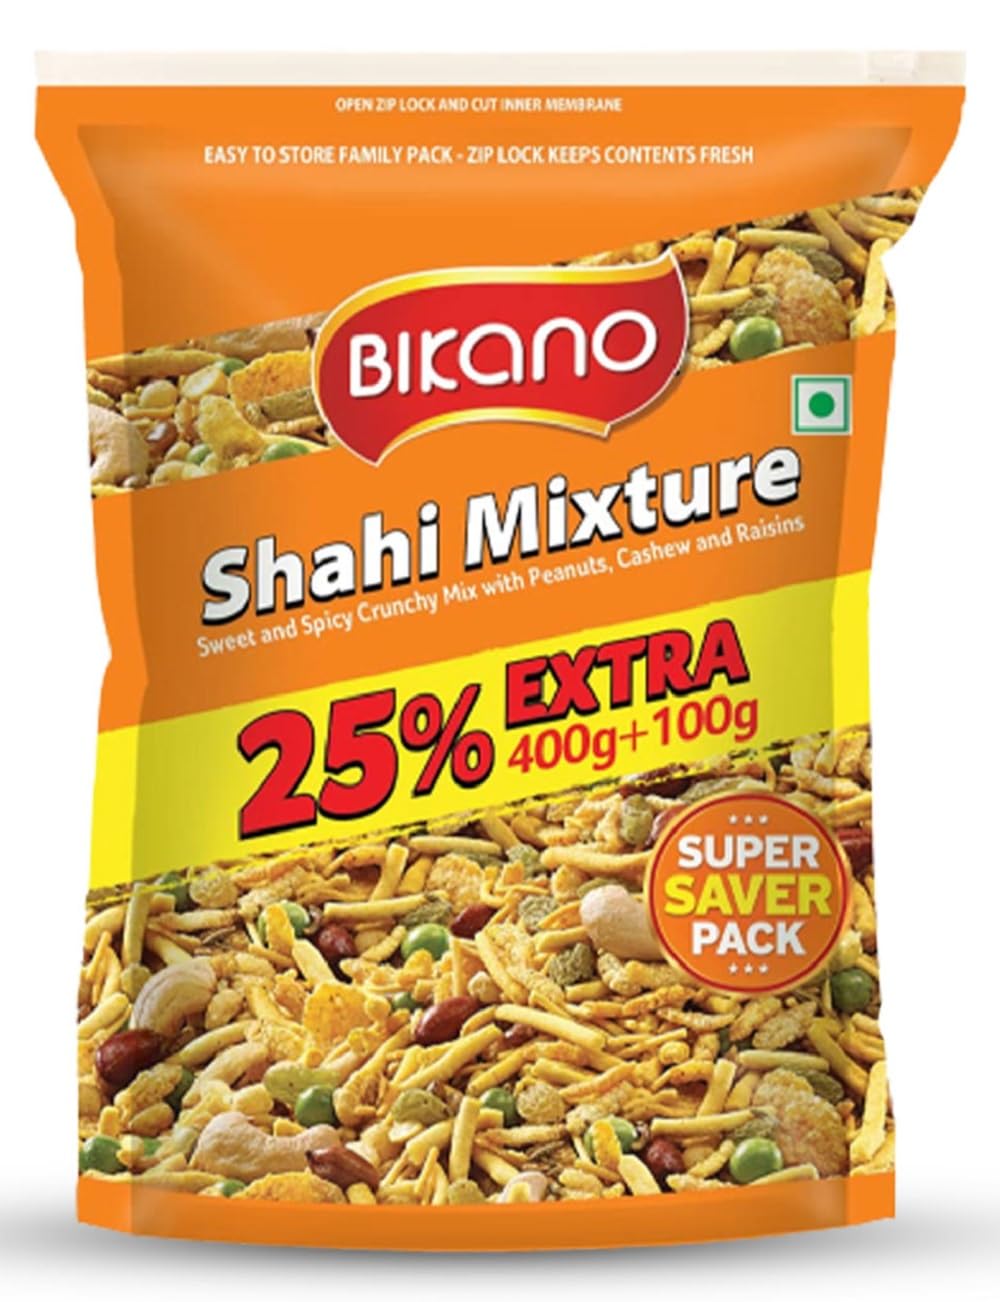 Bikano Shahi Mix, 400g